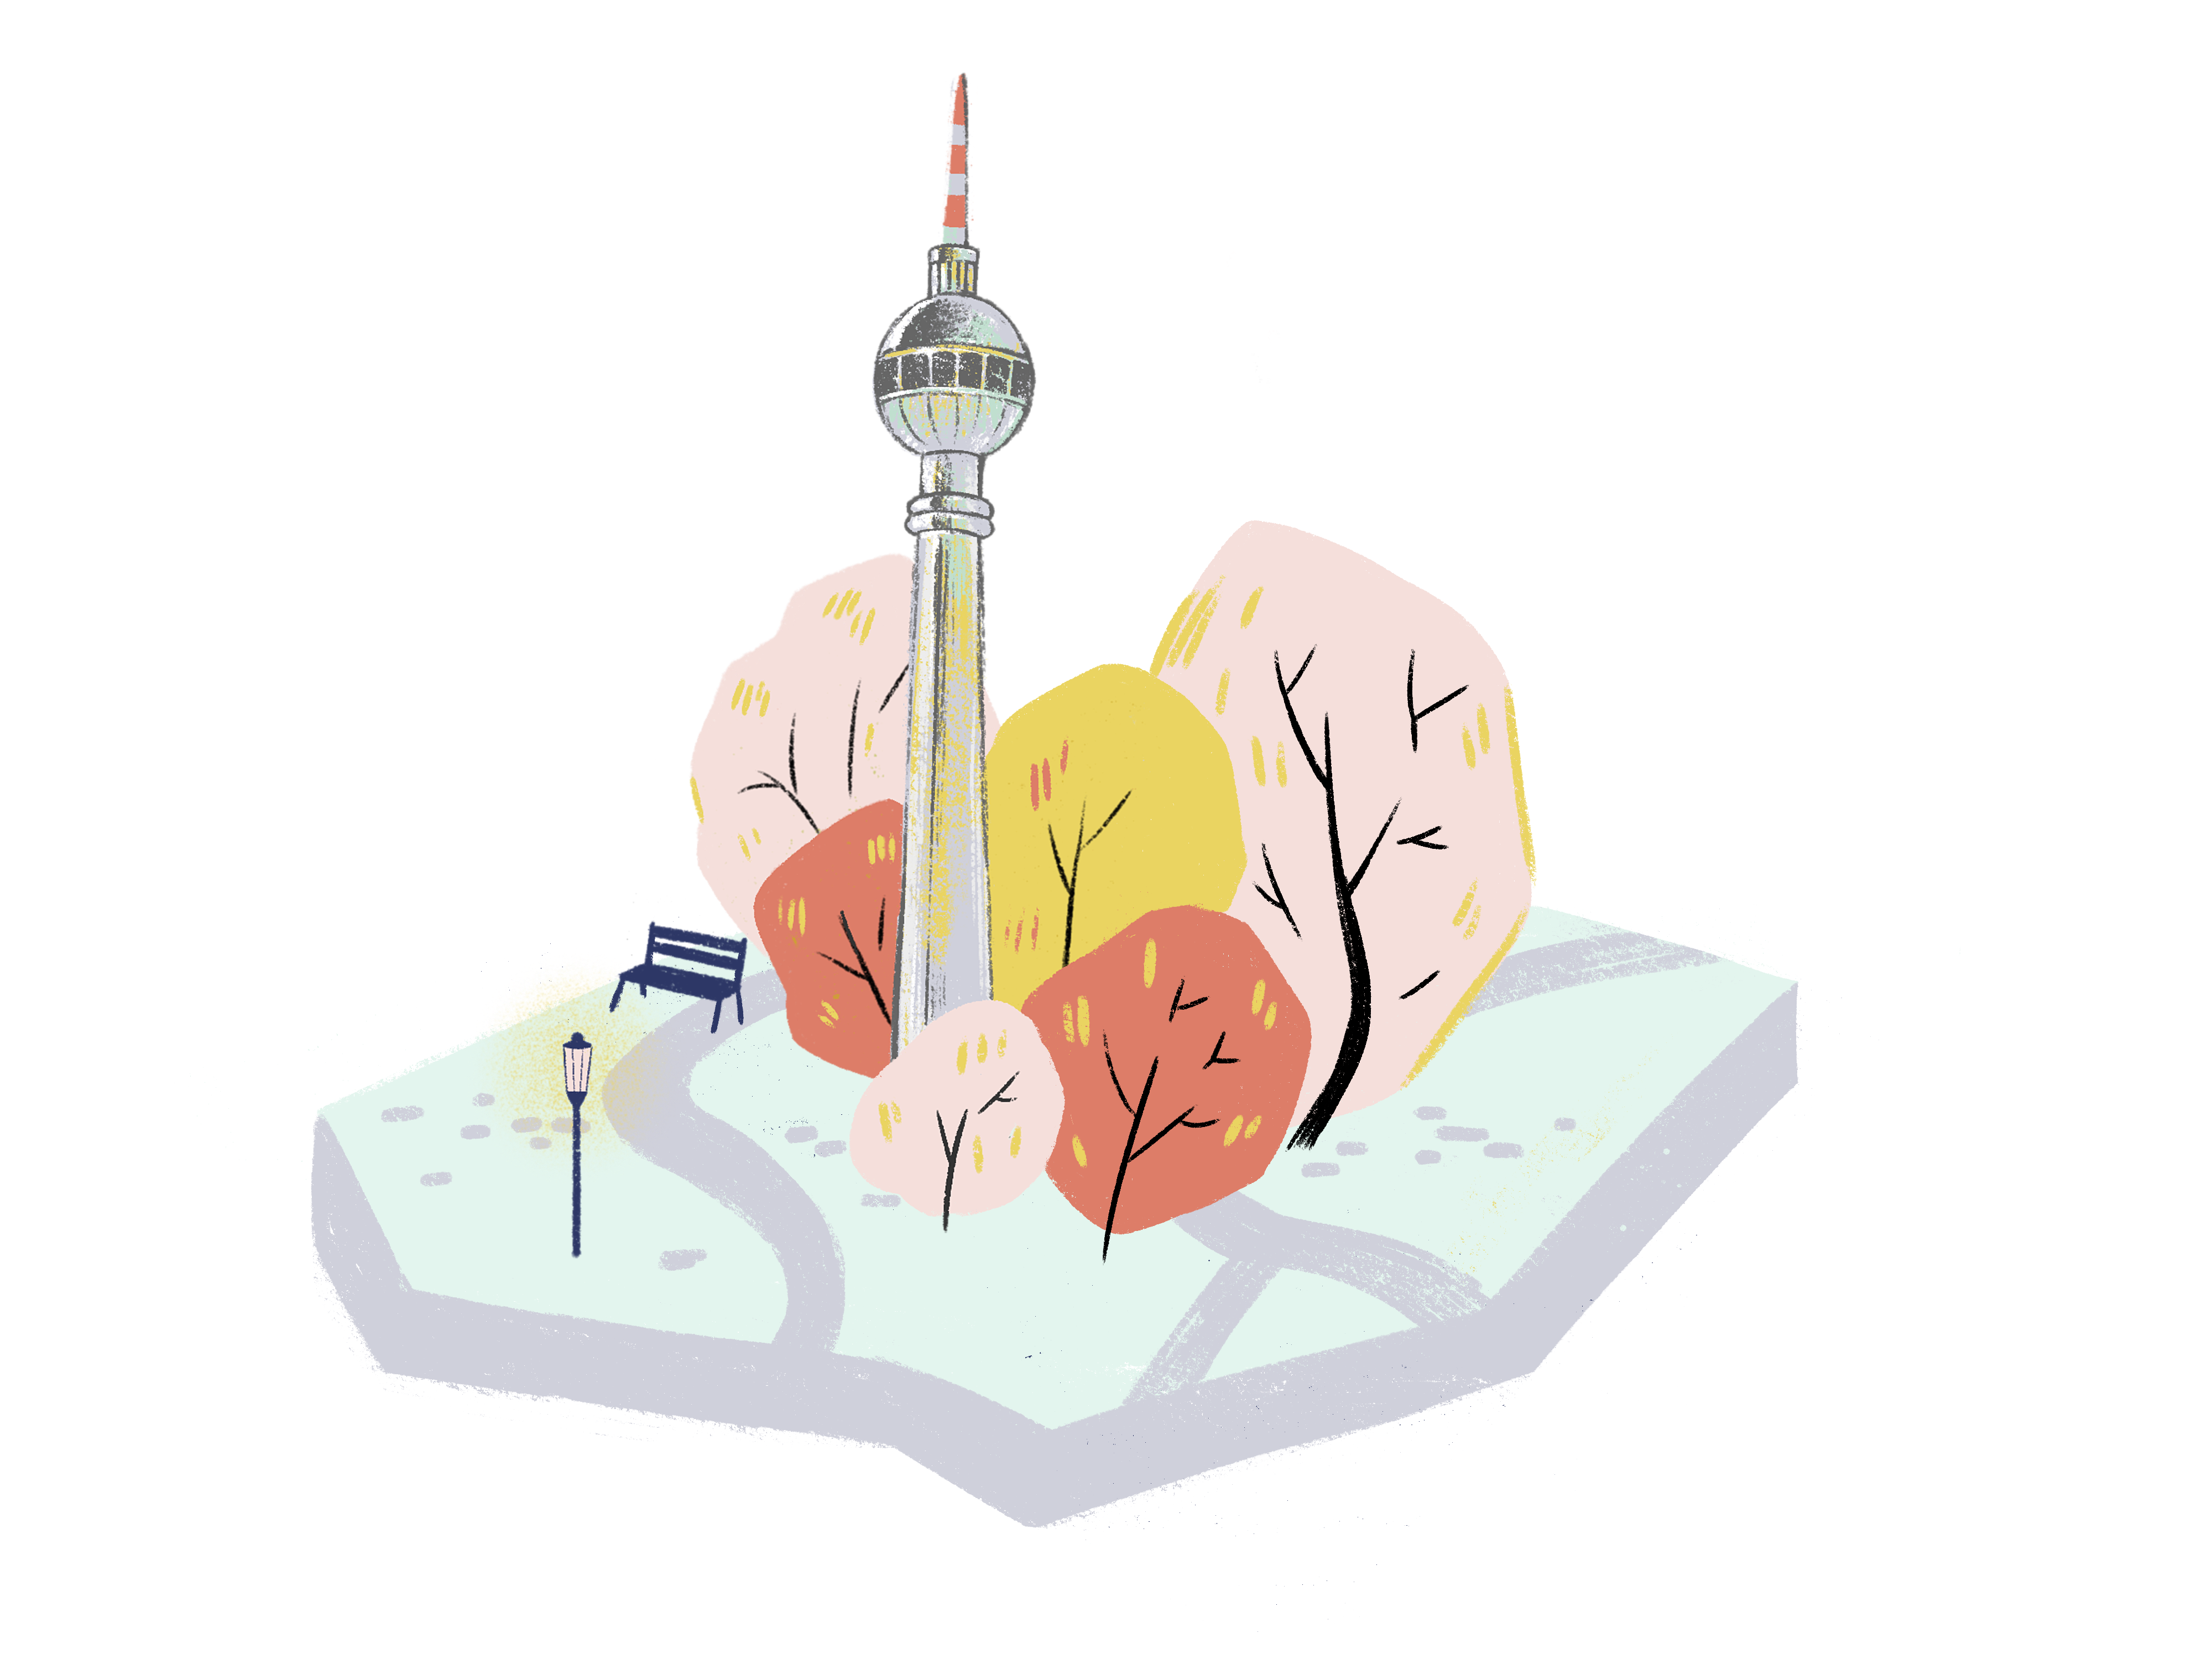 Illustration des Fernsehturms am Alexanderplatz